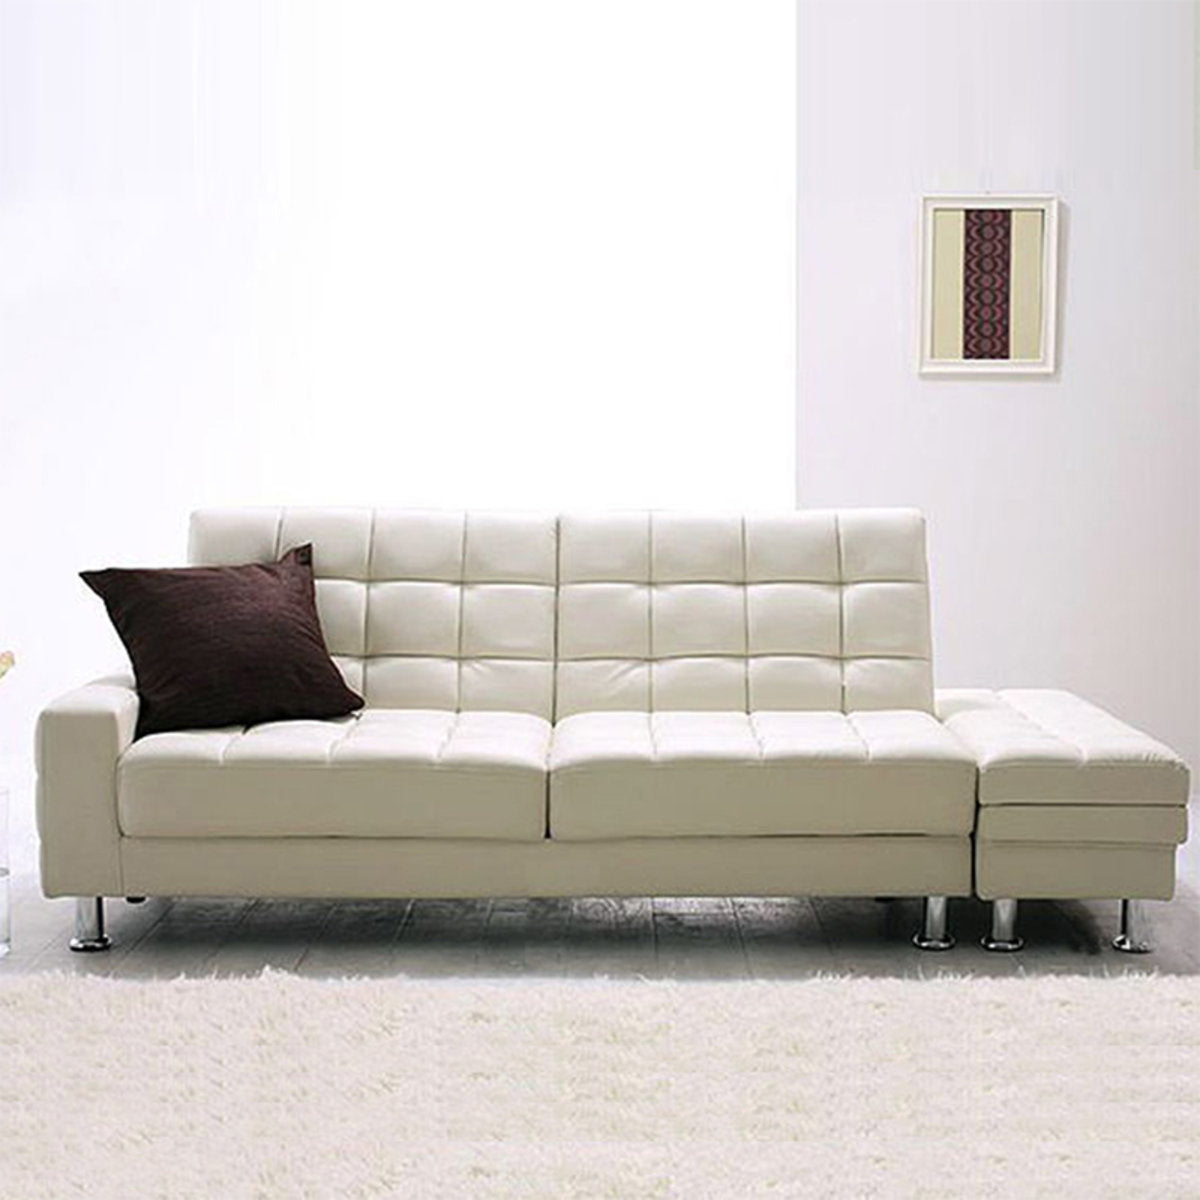 MerryRabbit – 日式小戶型多功能組合PU沙發MR-028 Pu Sofa Bed With Storage Ottoman